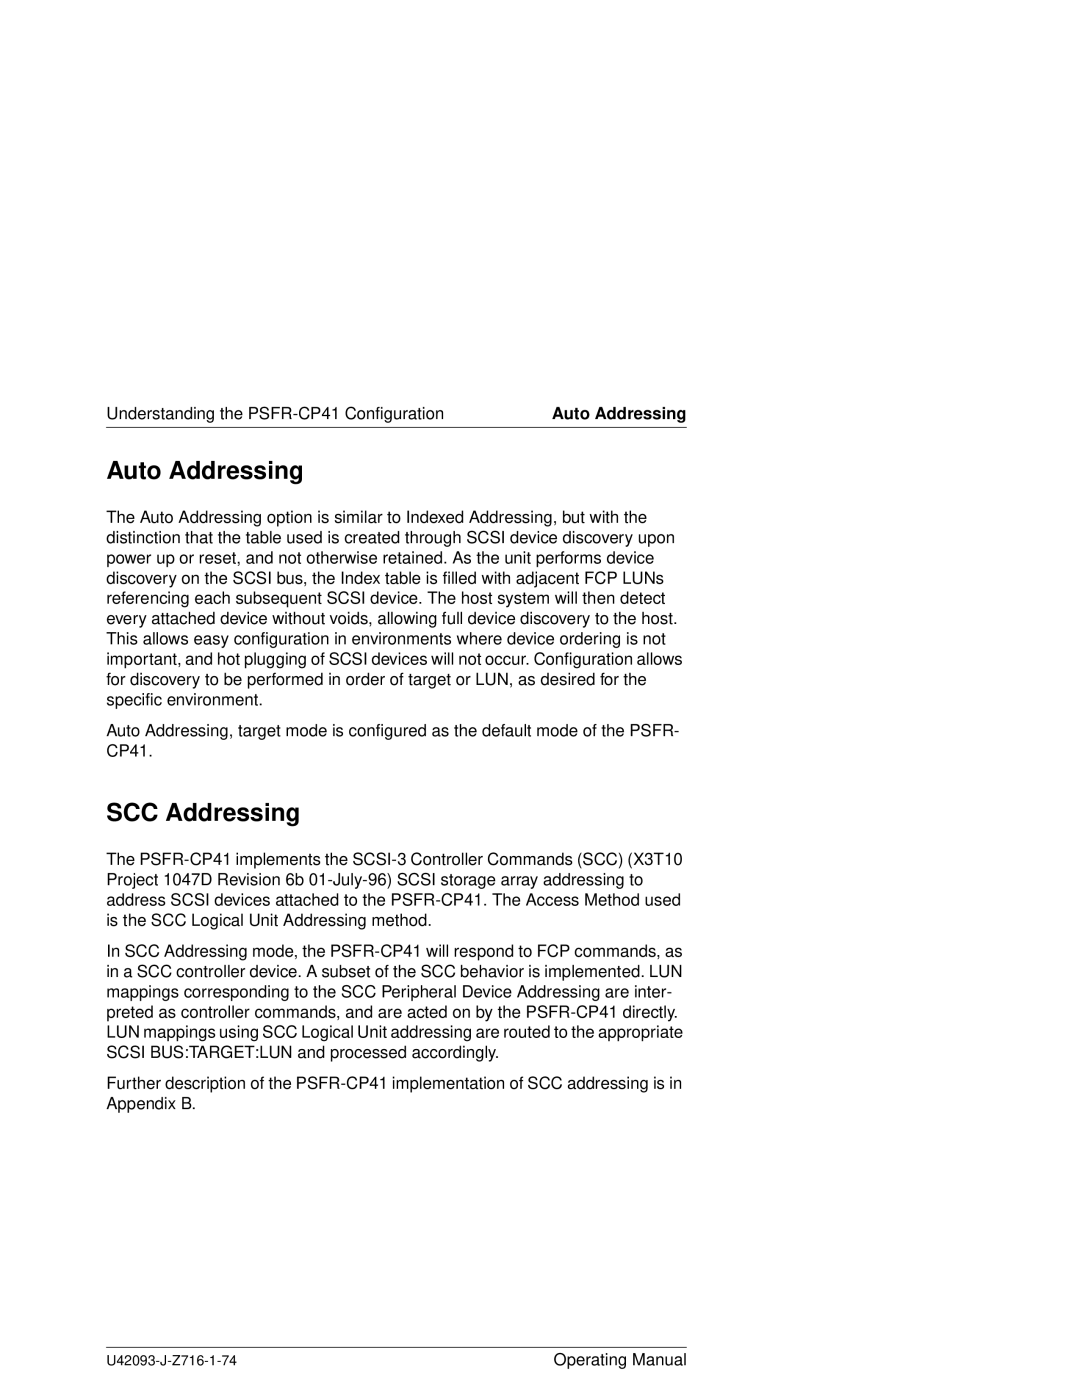 Siemens PSFR-CP41 manual Auto Addressing, SCC Addressing 